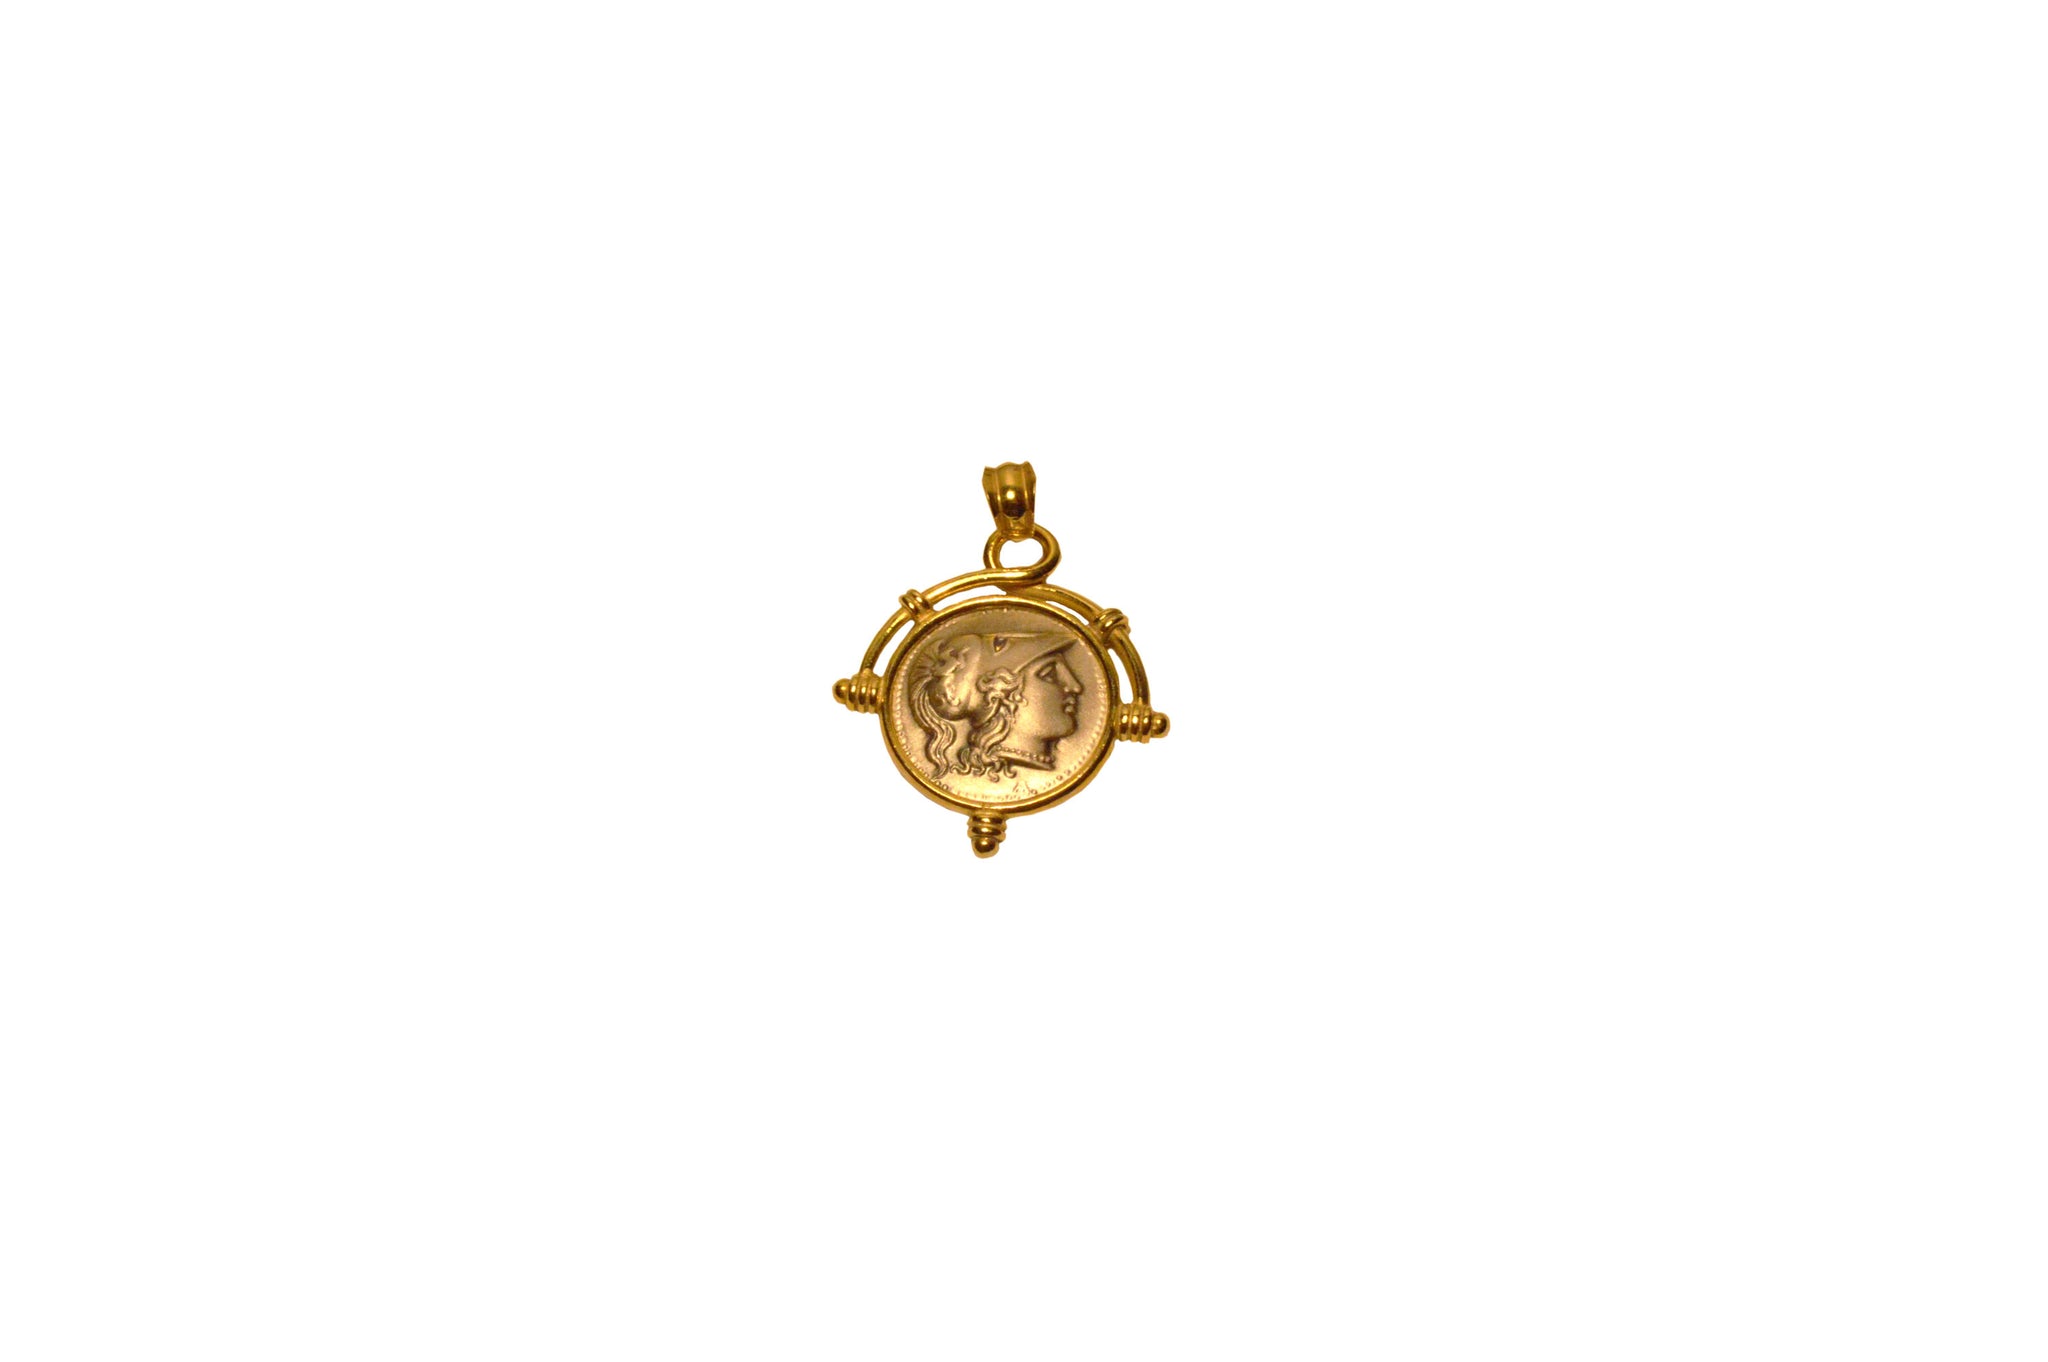 Athena Filigree Ancient Coin Pendant